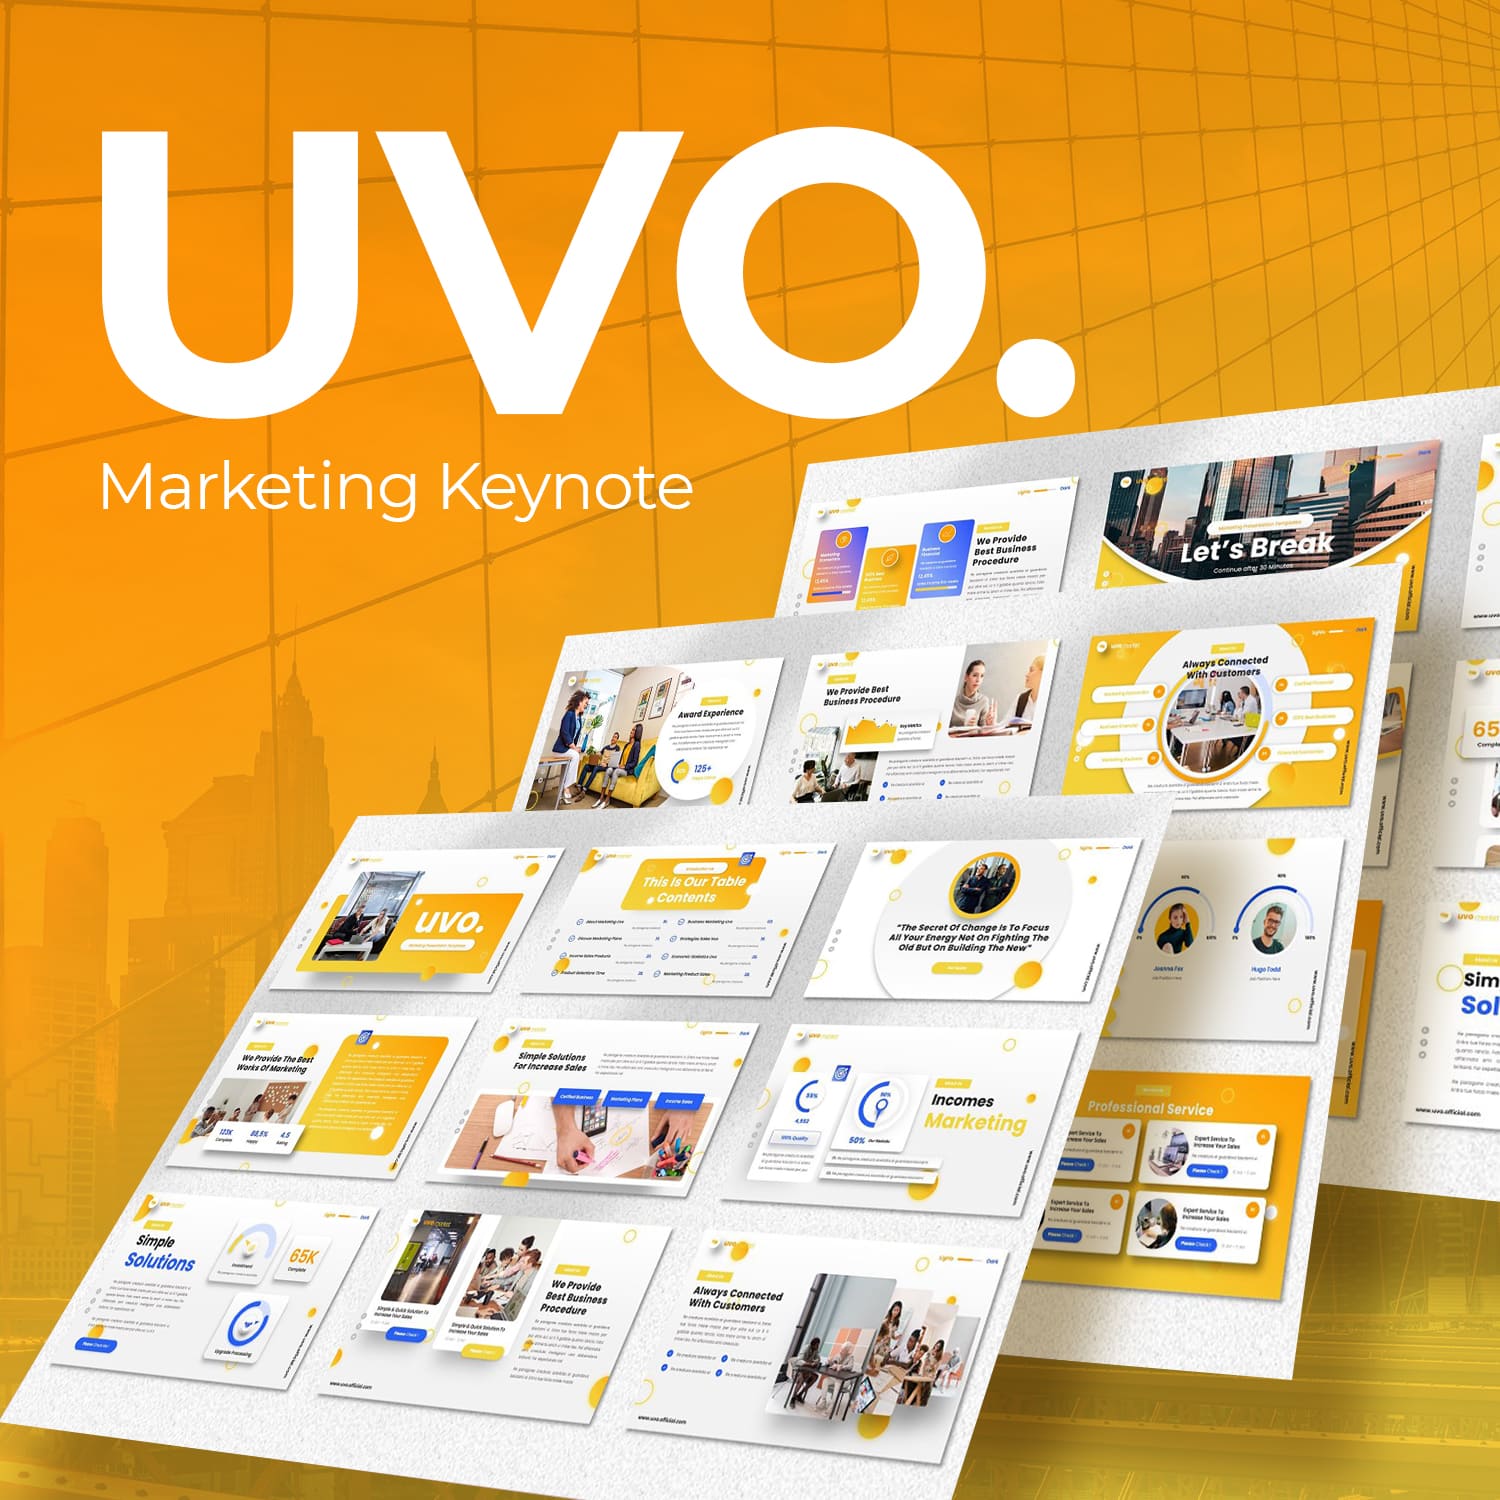 Uvo - Marketing Keynote Template.